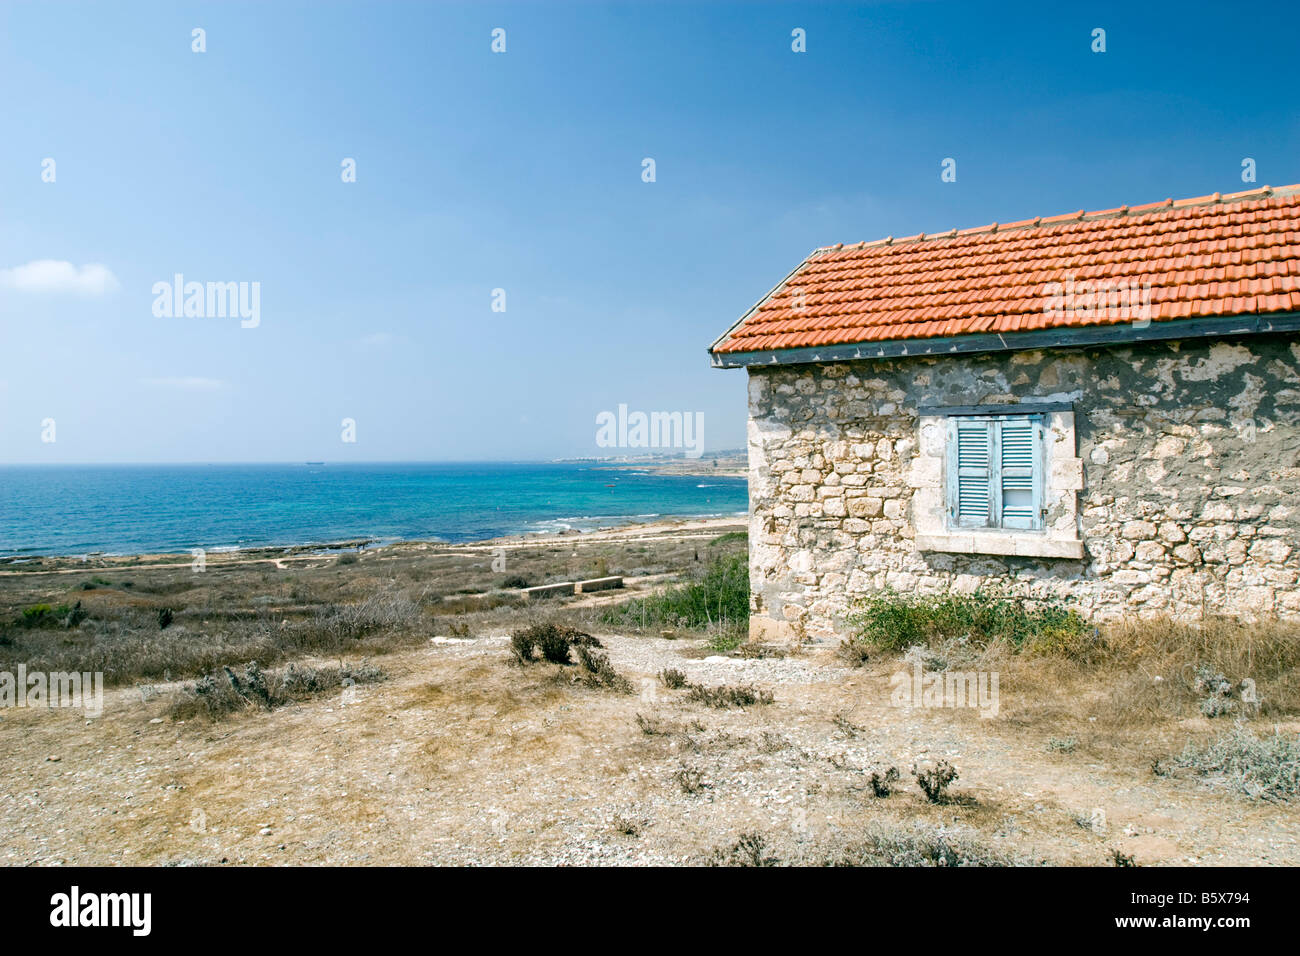 Paphos seascape with orange roof stone tiled house Stock Photo